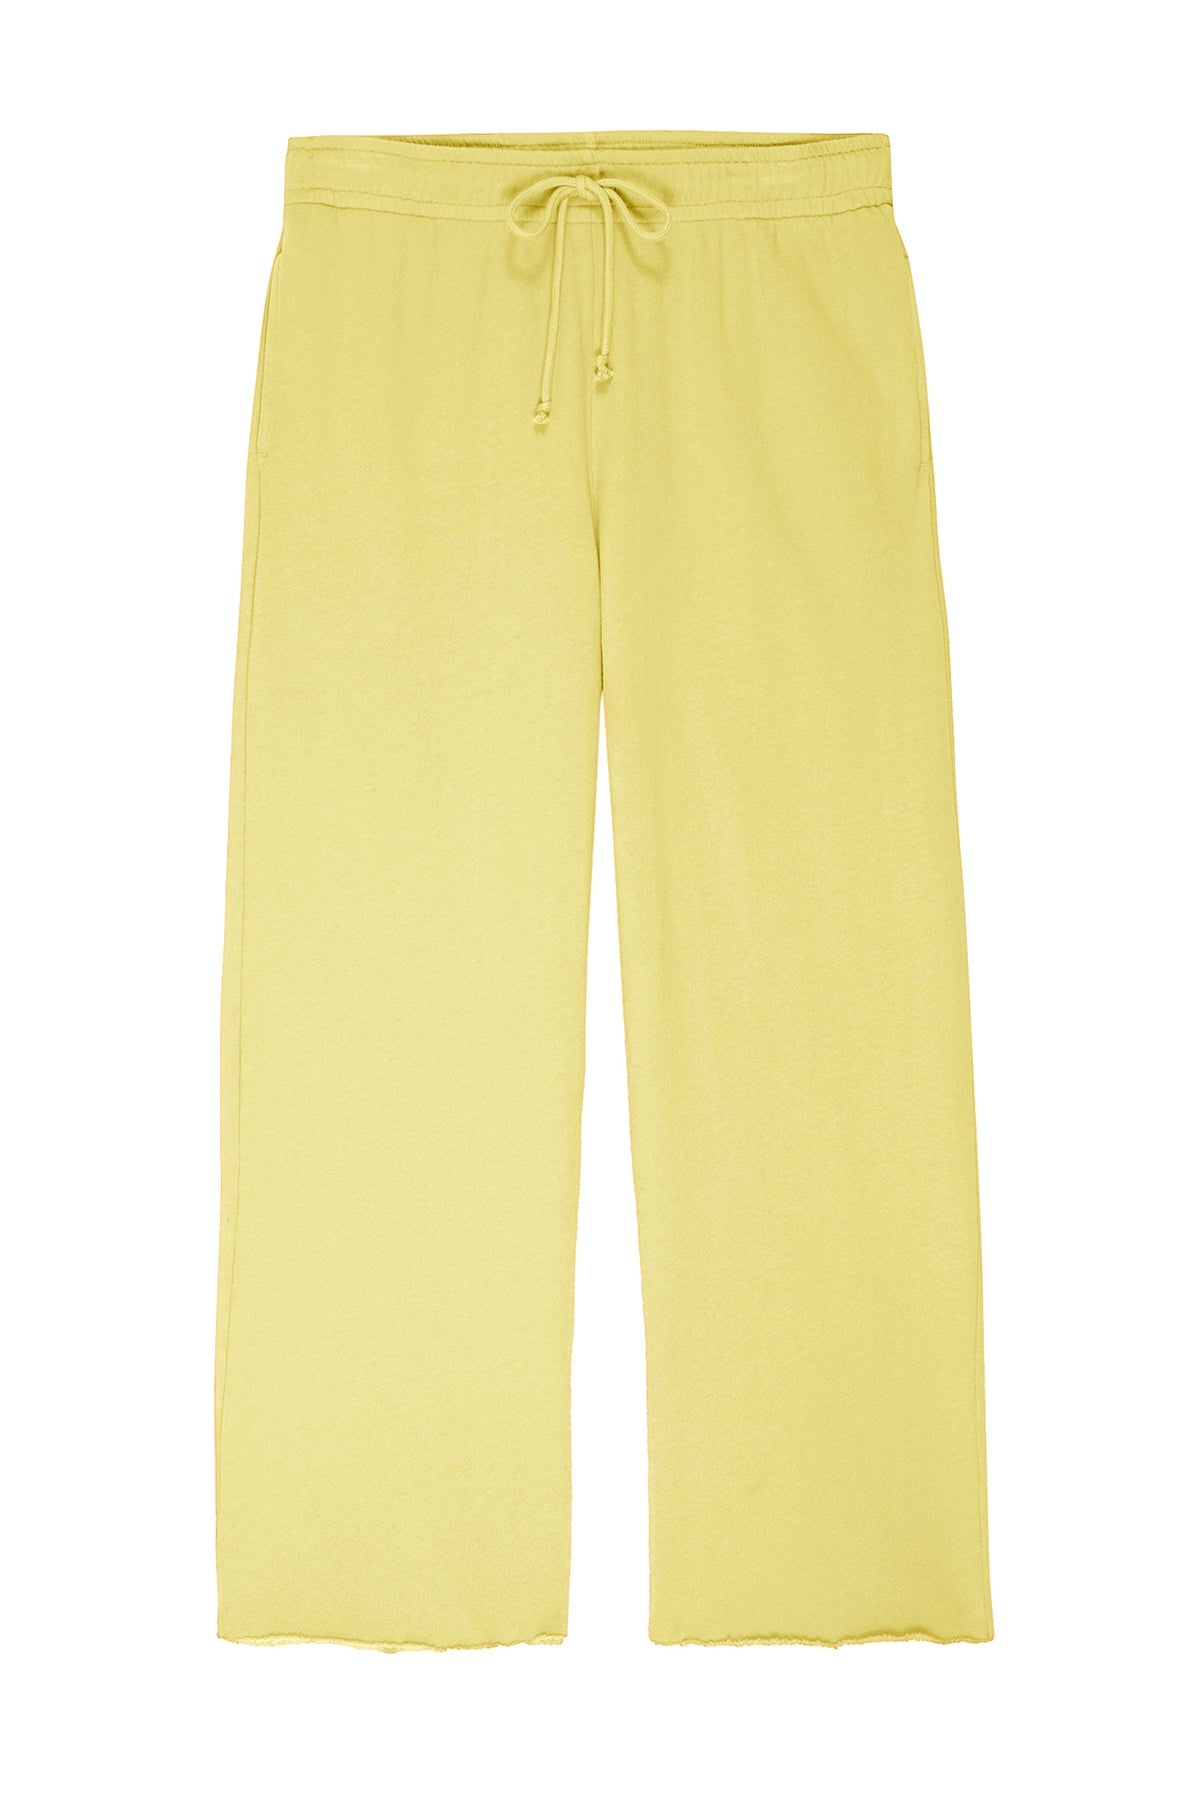 Montecito Sweatpant in lemon. yellow flat-26631042203841